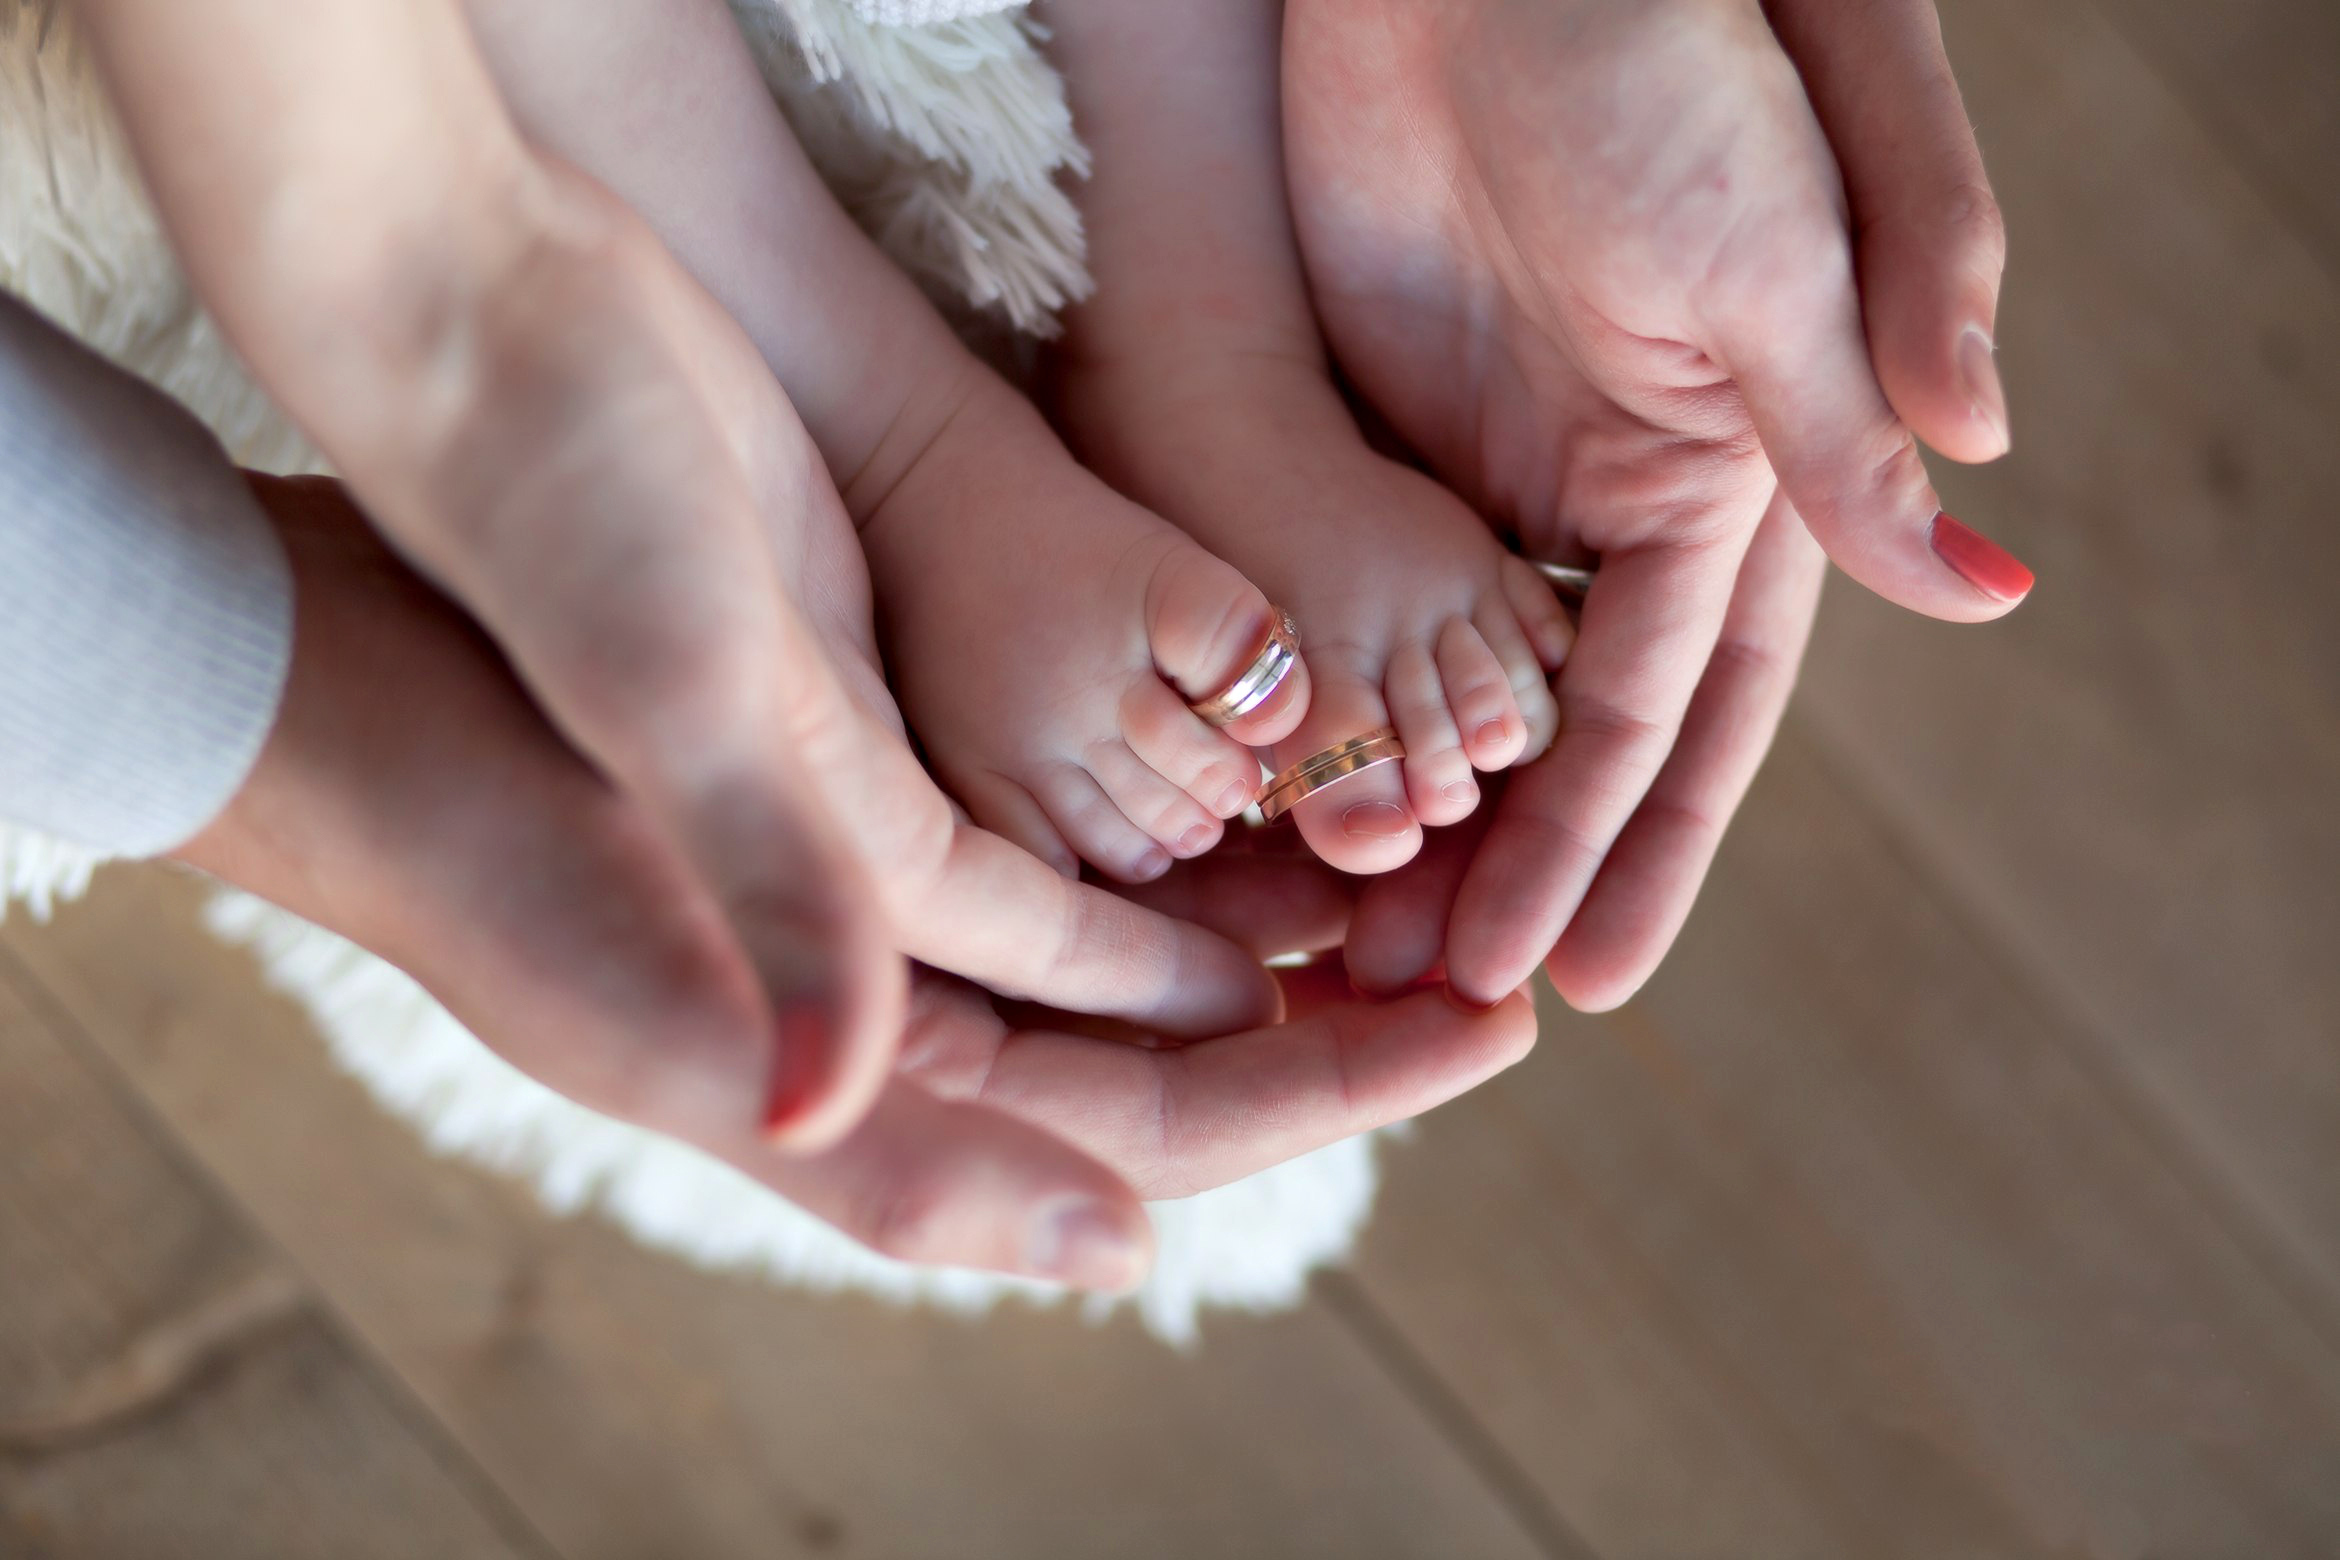 Пальчики дороже. Ножки младенца в руках родителей. Ножки малыша в руках. Детские ножки в ладошках. Руки родителей и малыша.